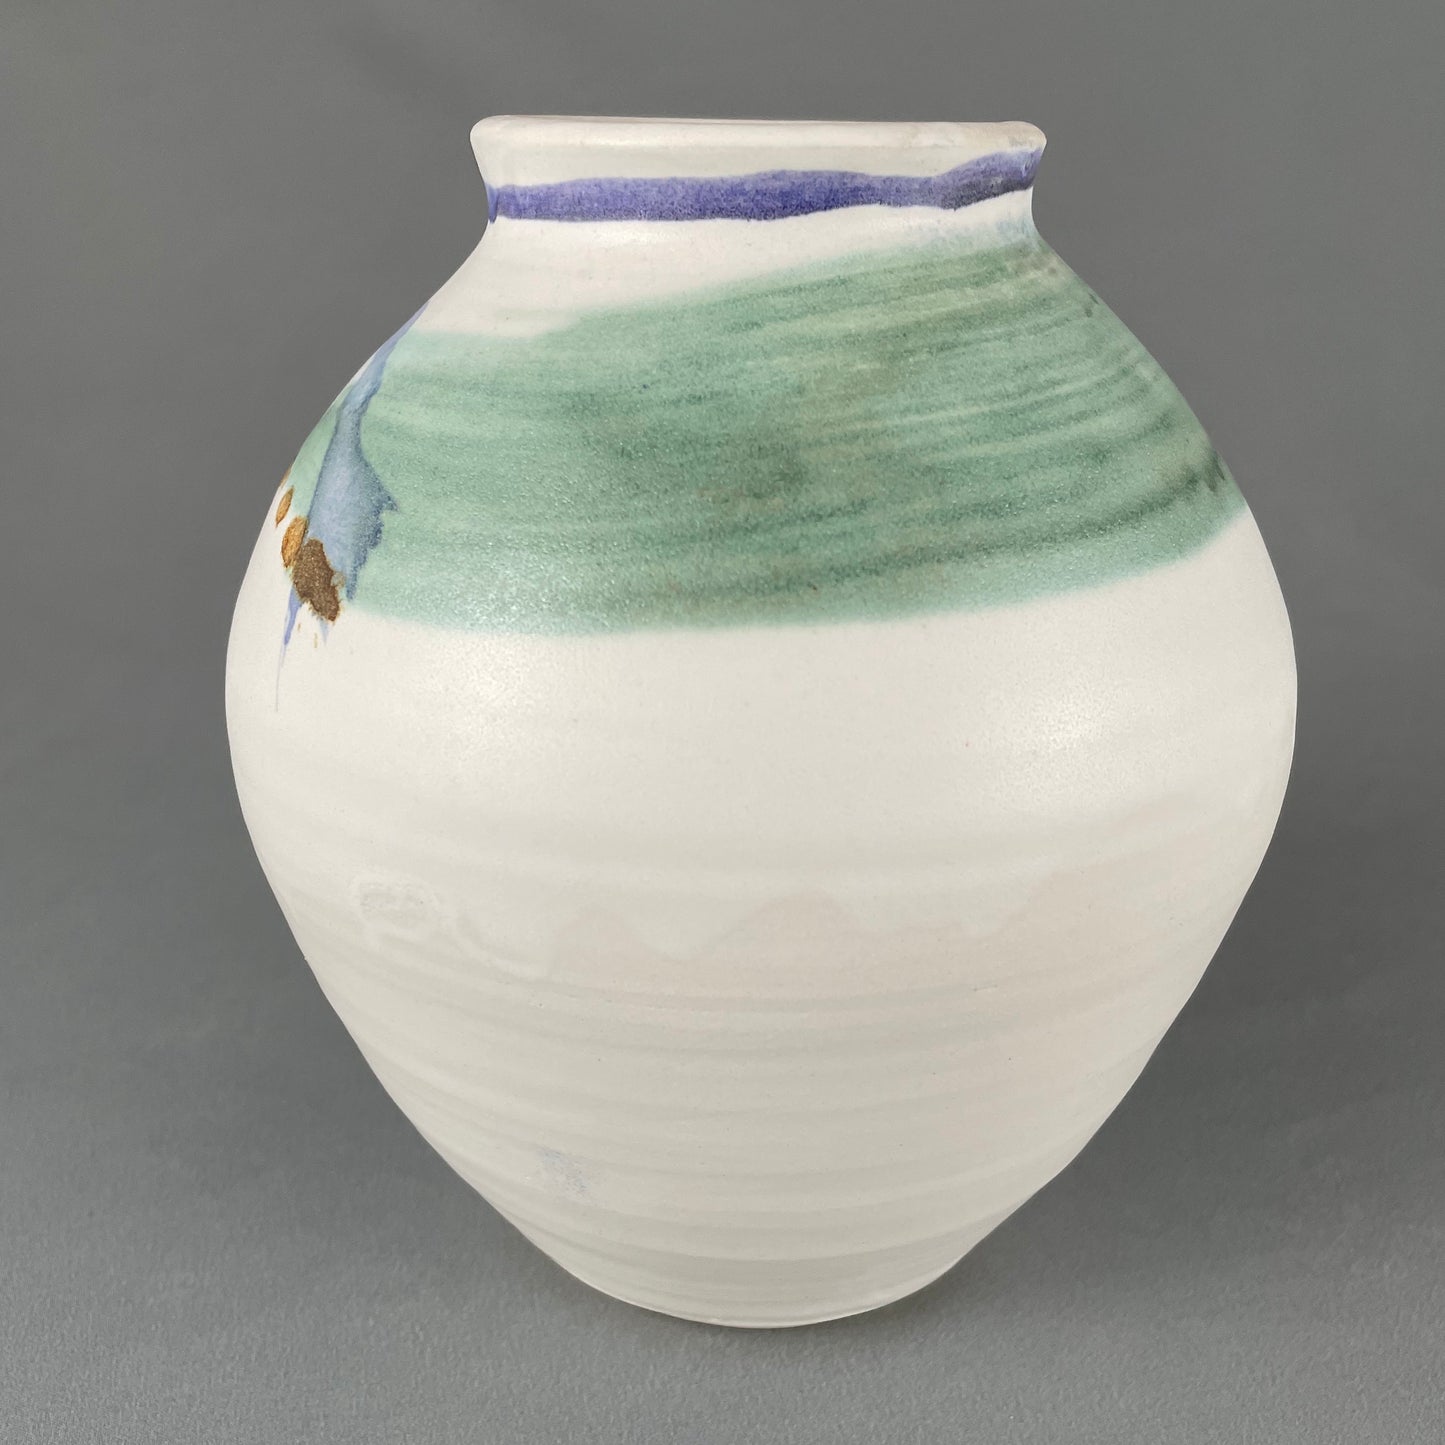 Brilliant white/abstract design vase